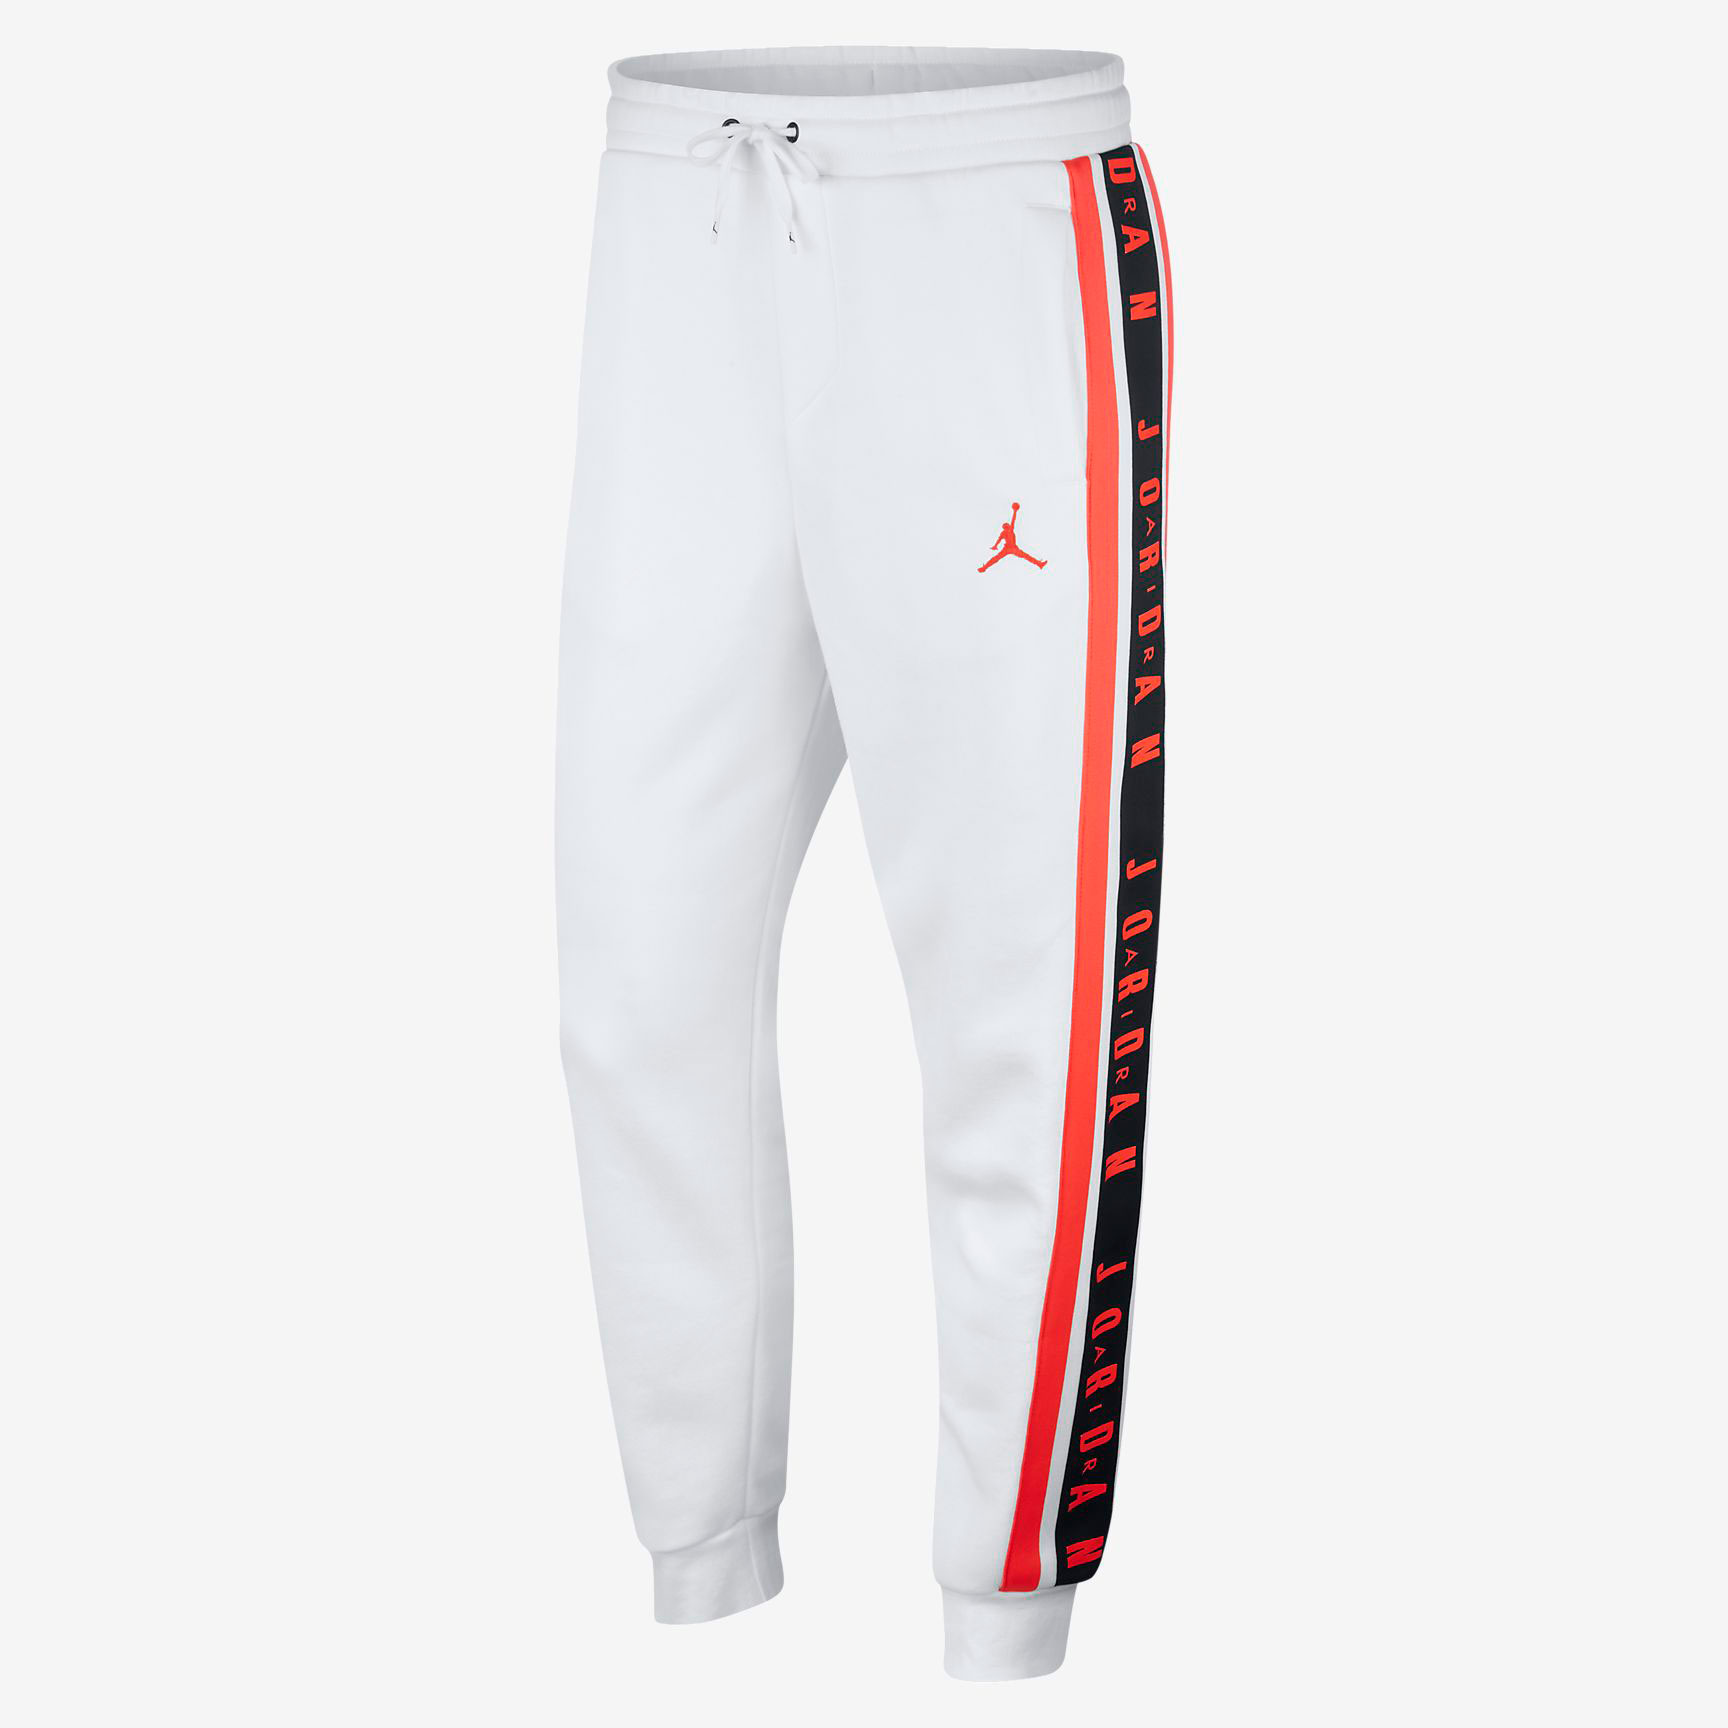 Jordan Air Fleece Pants for Fall 2019 | SneakerFits.com